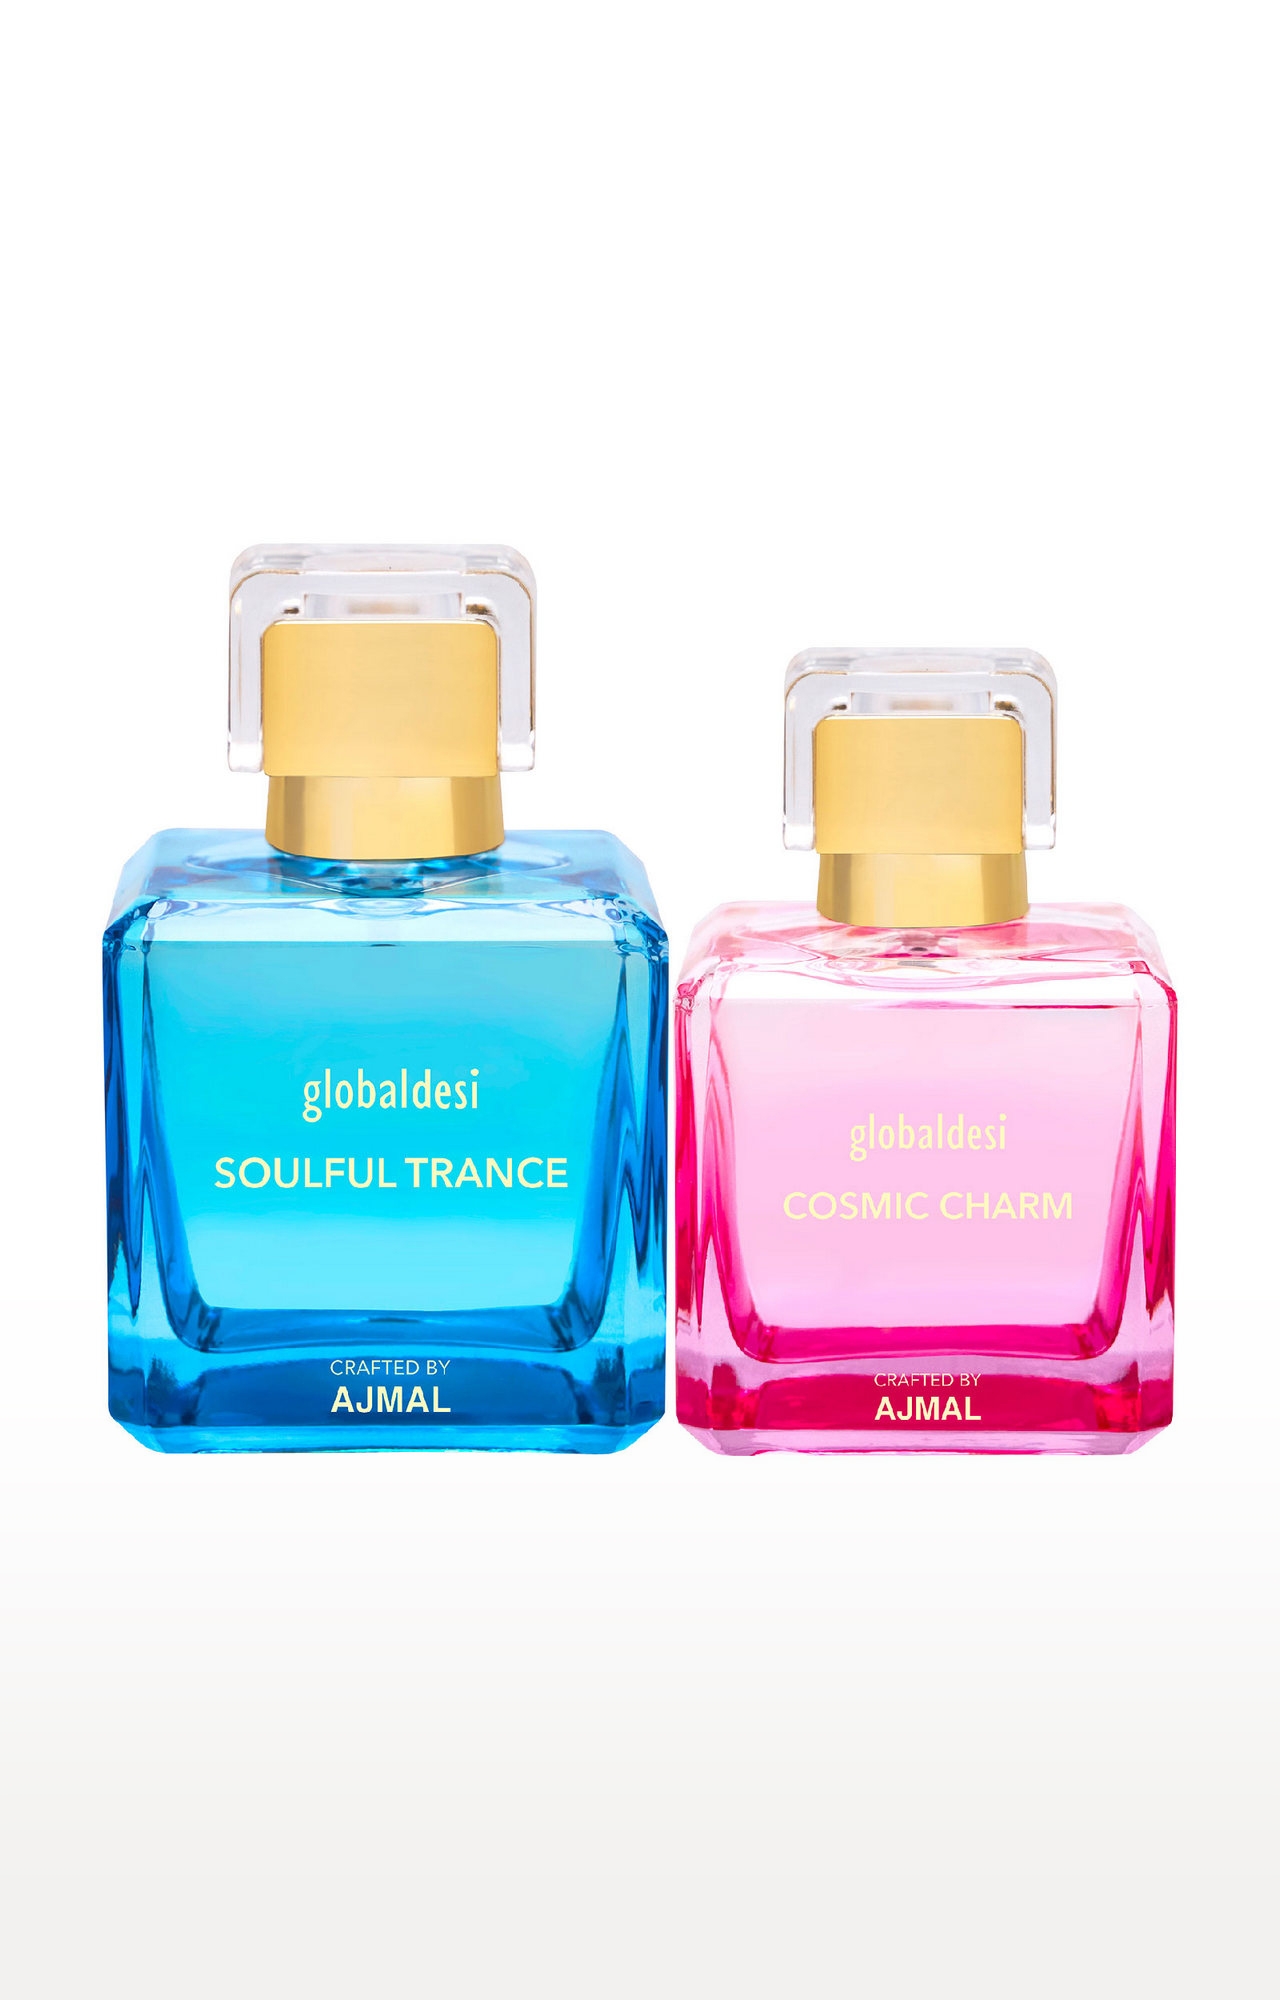 Global Desi Crafted By Ajmal | Global Desi Soulful Trance 100ML & Cosmic Charm 50ML Eau De Parfum for Women Crafted by Ajmal + 2 Parfum Testers